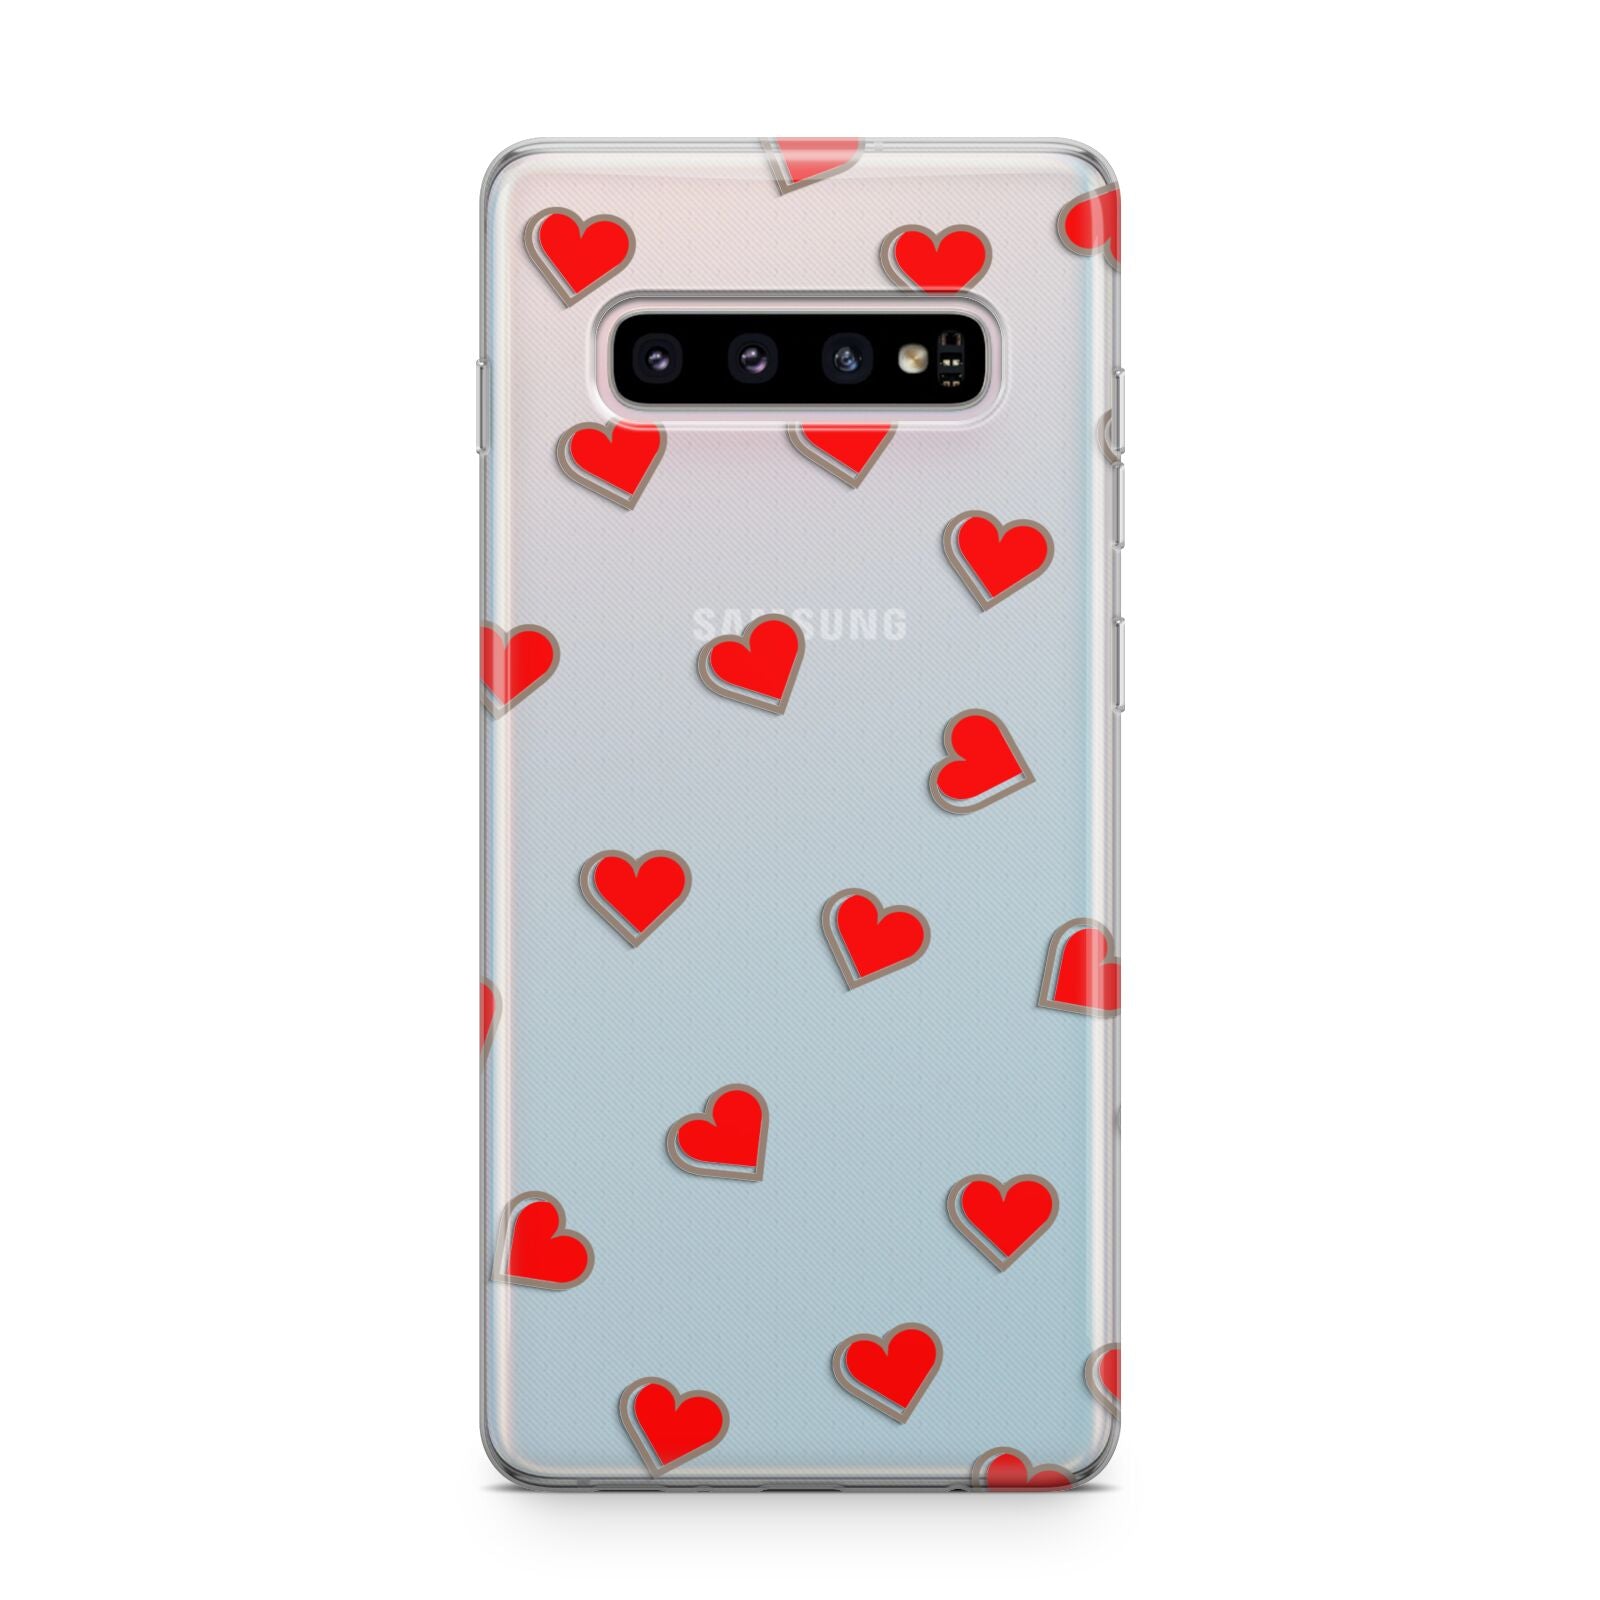 Cute Red Hearts Samsung Galaxy S10 Plus Case